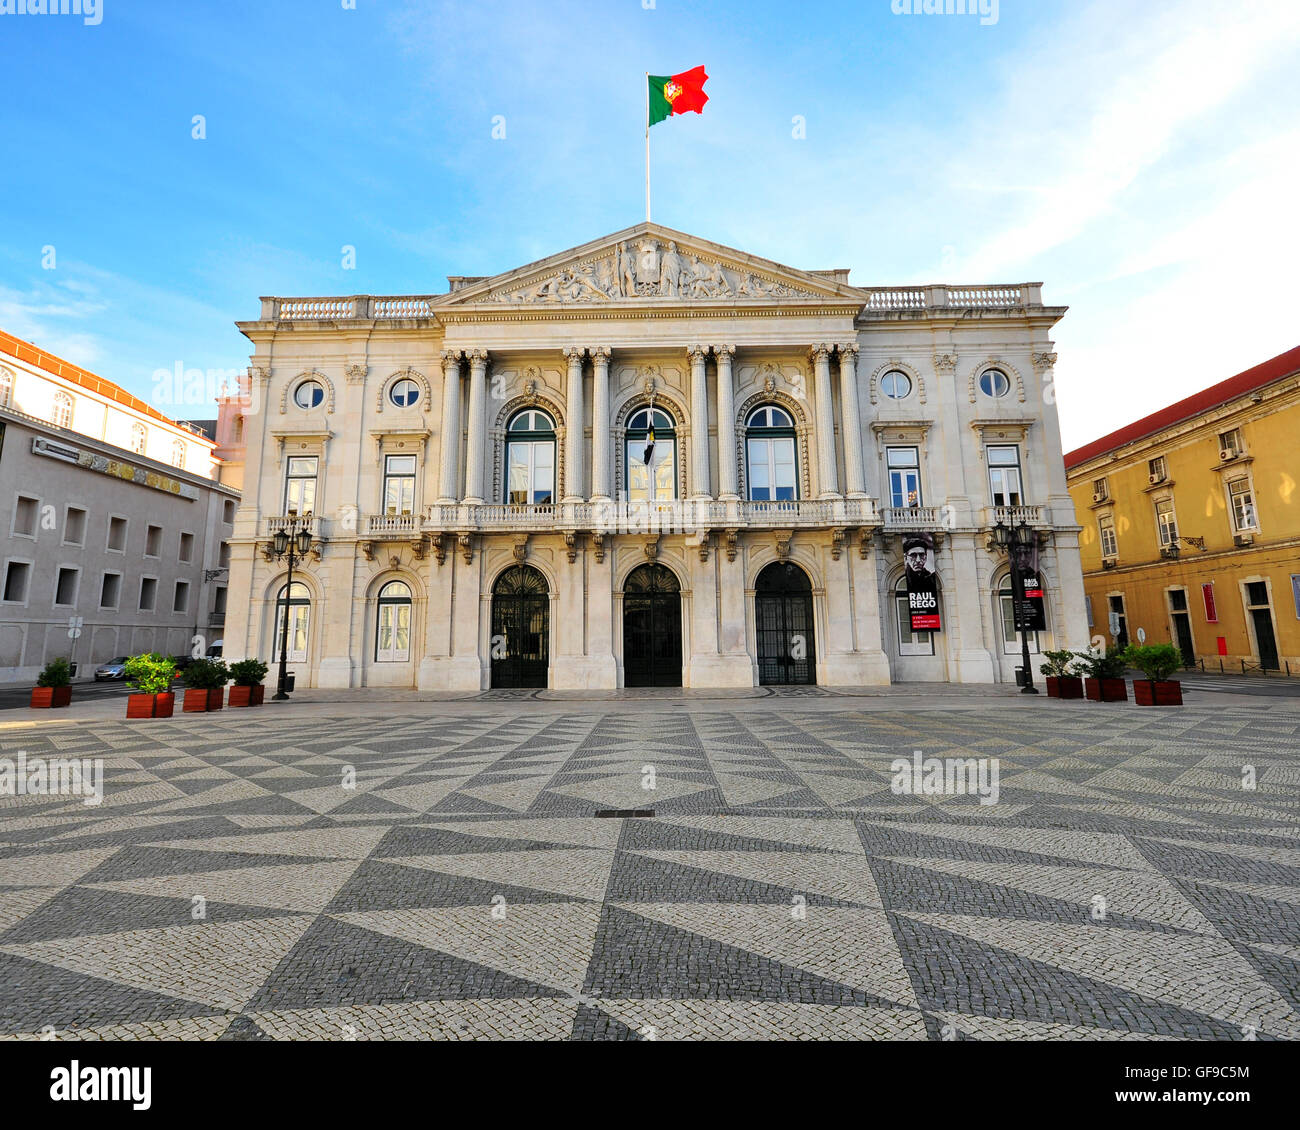 LISBON, PORTUGAL - DECEMBER 21: Cityhall building on the square of Municipio in Lisbon on december 21, 2013. Lisbon is a capital Stock Photo